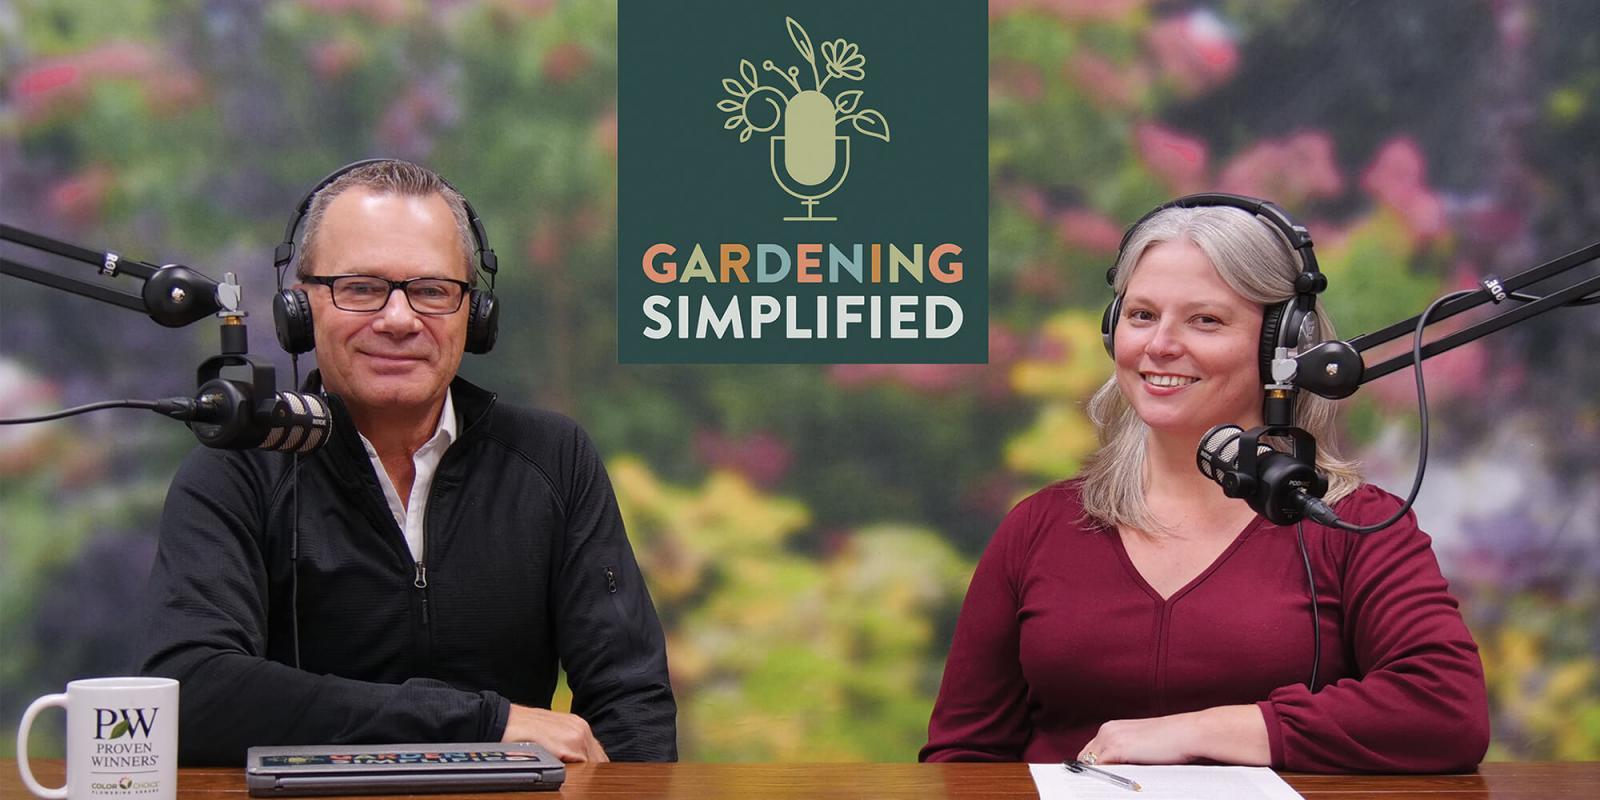 Gardening Simplified show celebrates one year anniversary